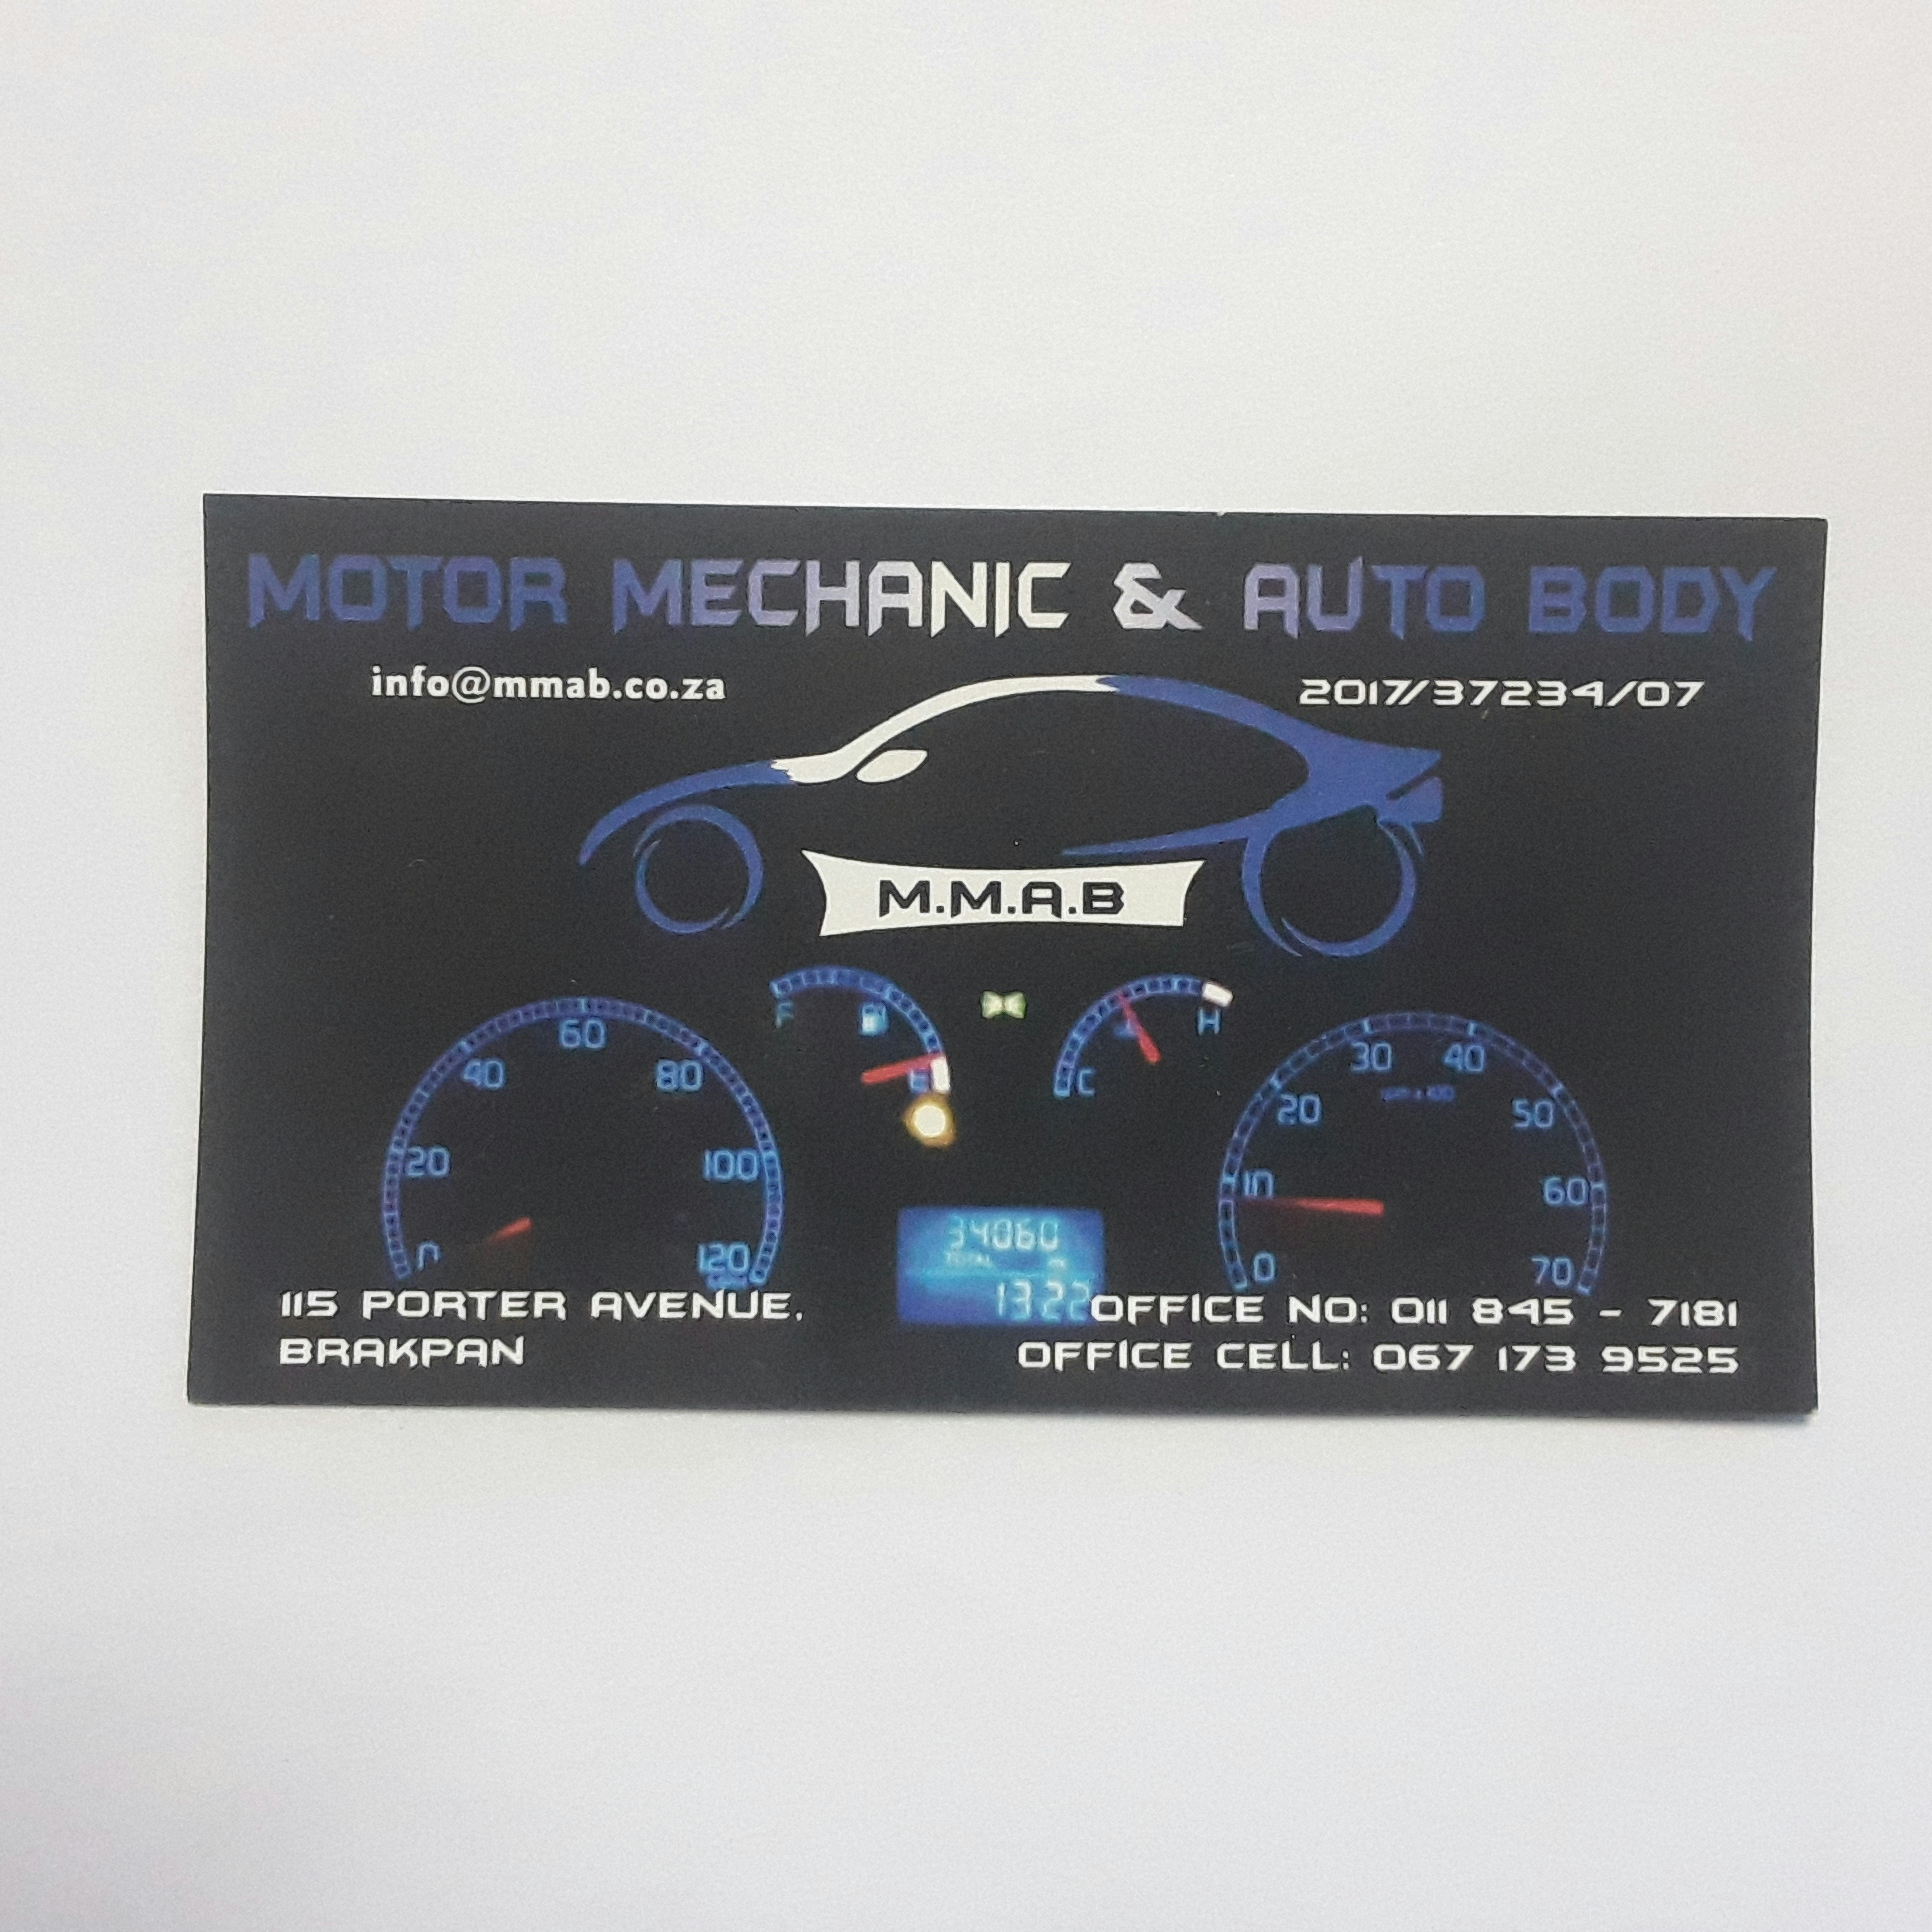 Motor Mechanic & Auto Body